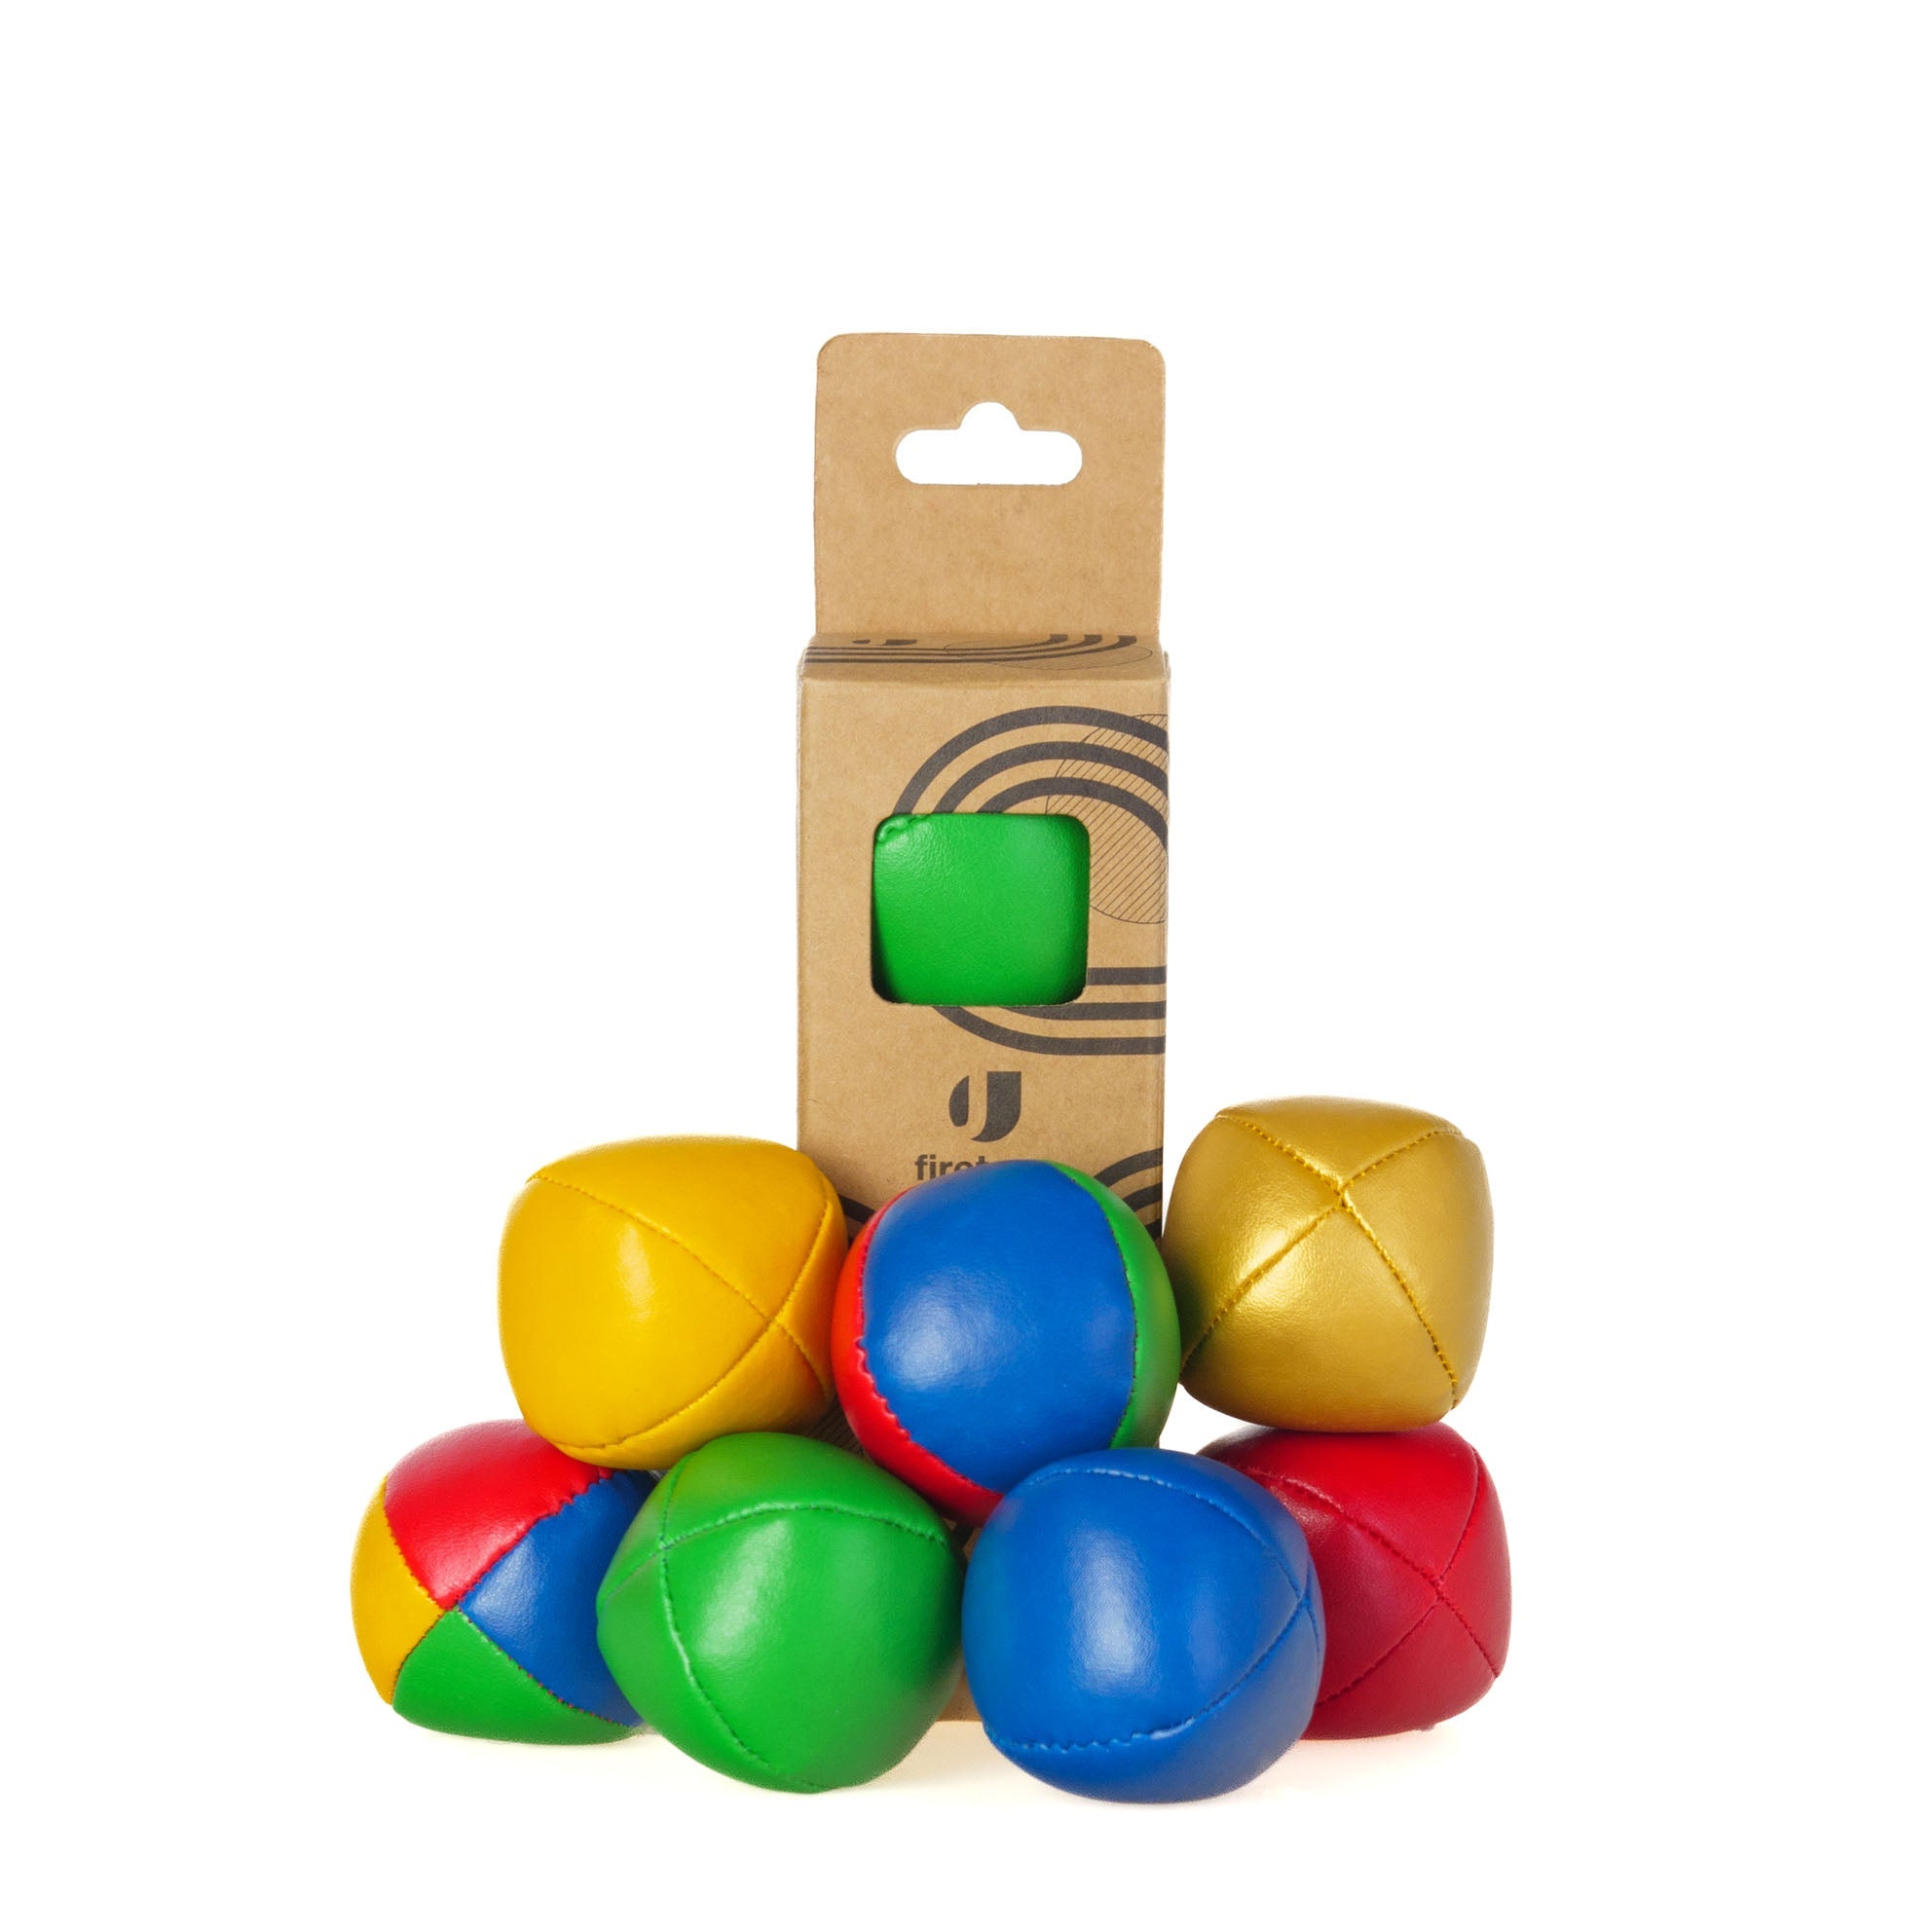 70g balls with box